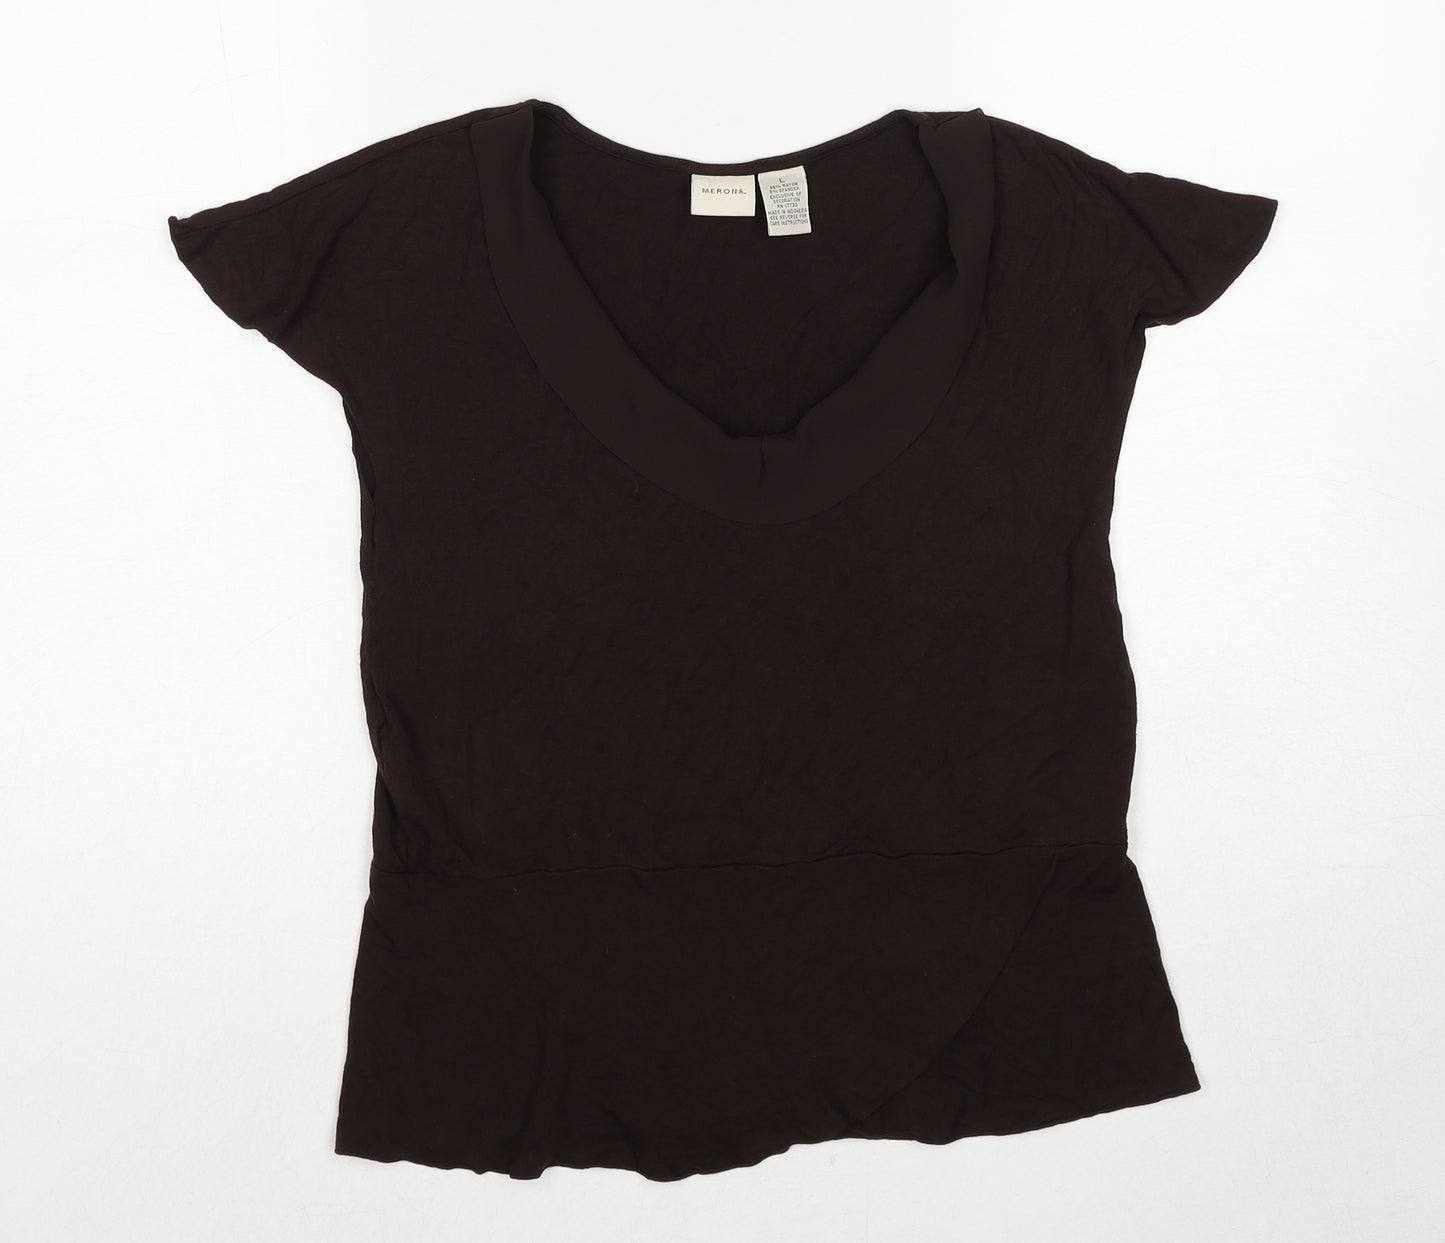 Merona Womens Brown Viscose Basic T-Shirt Size L Round Neck